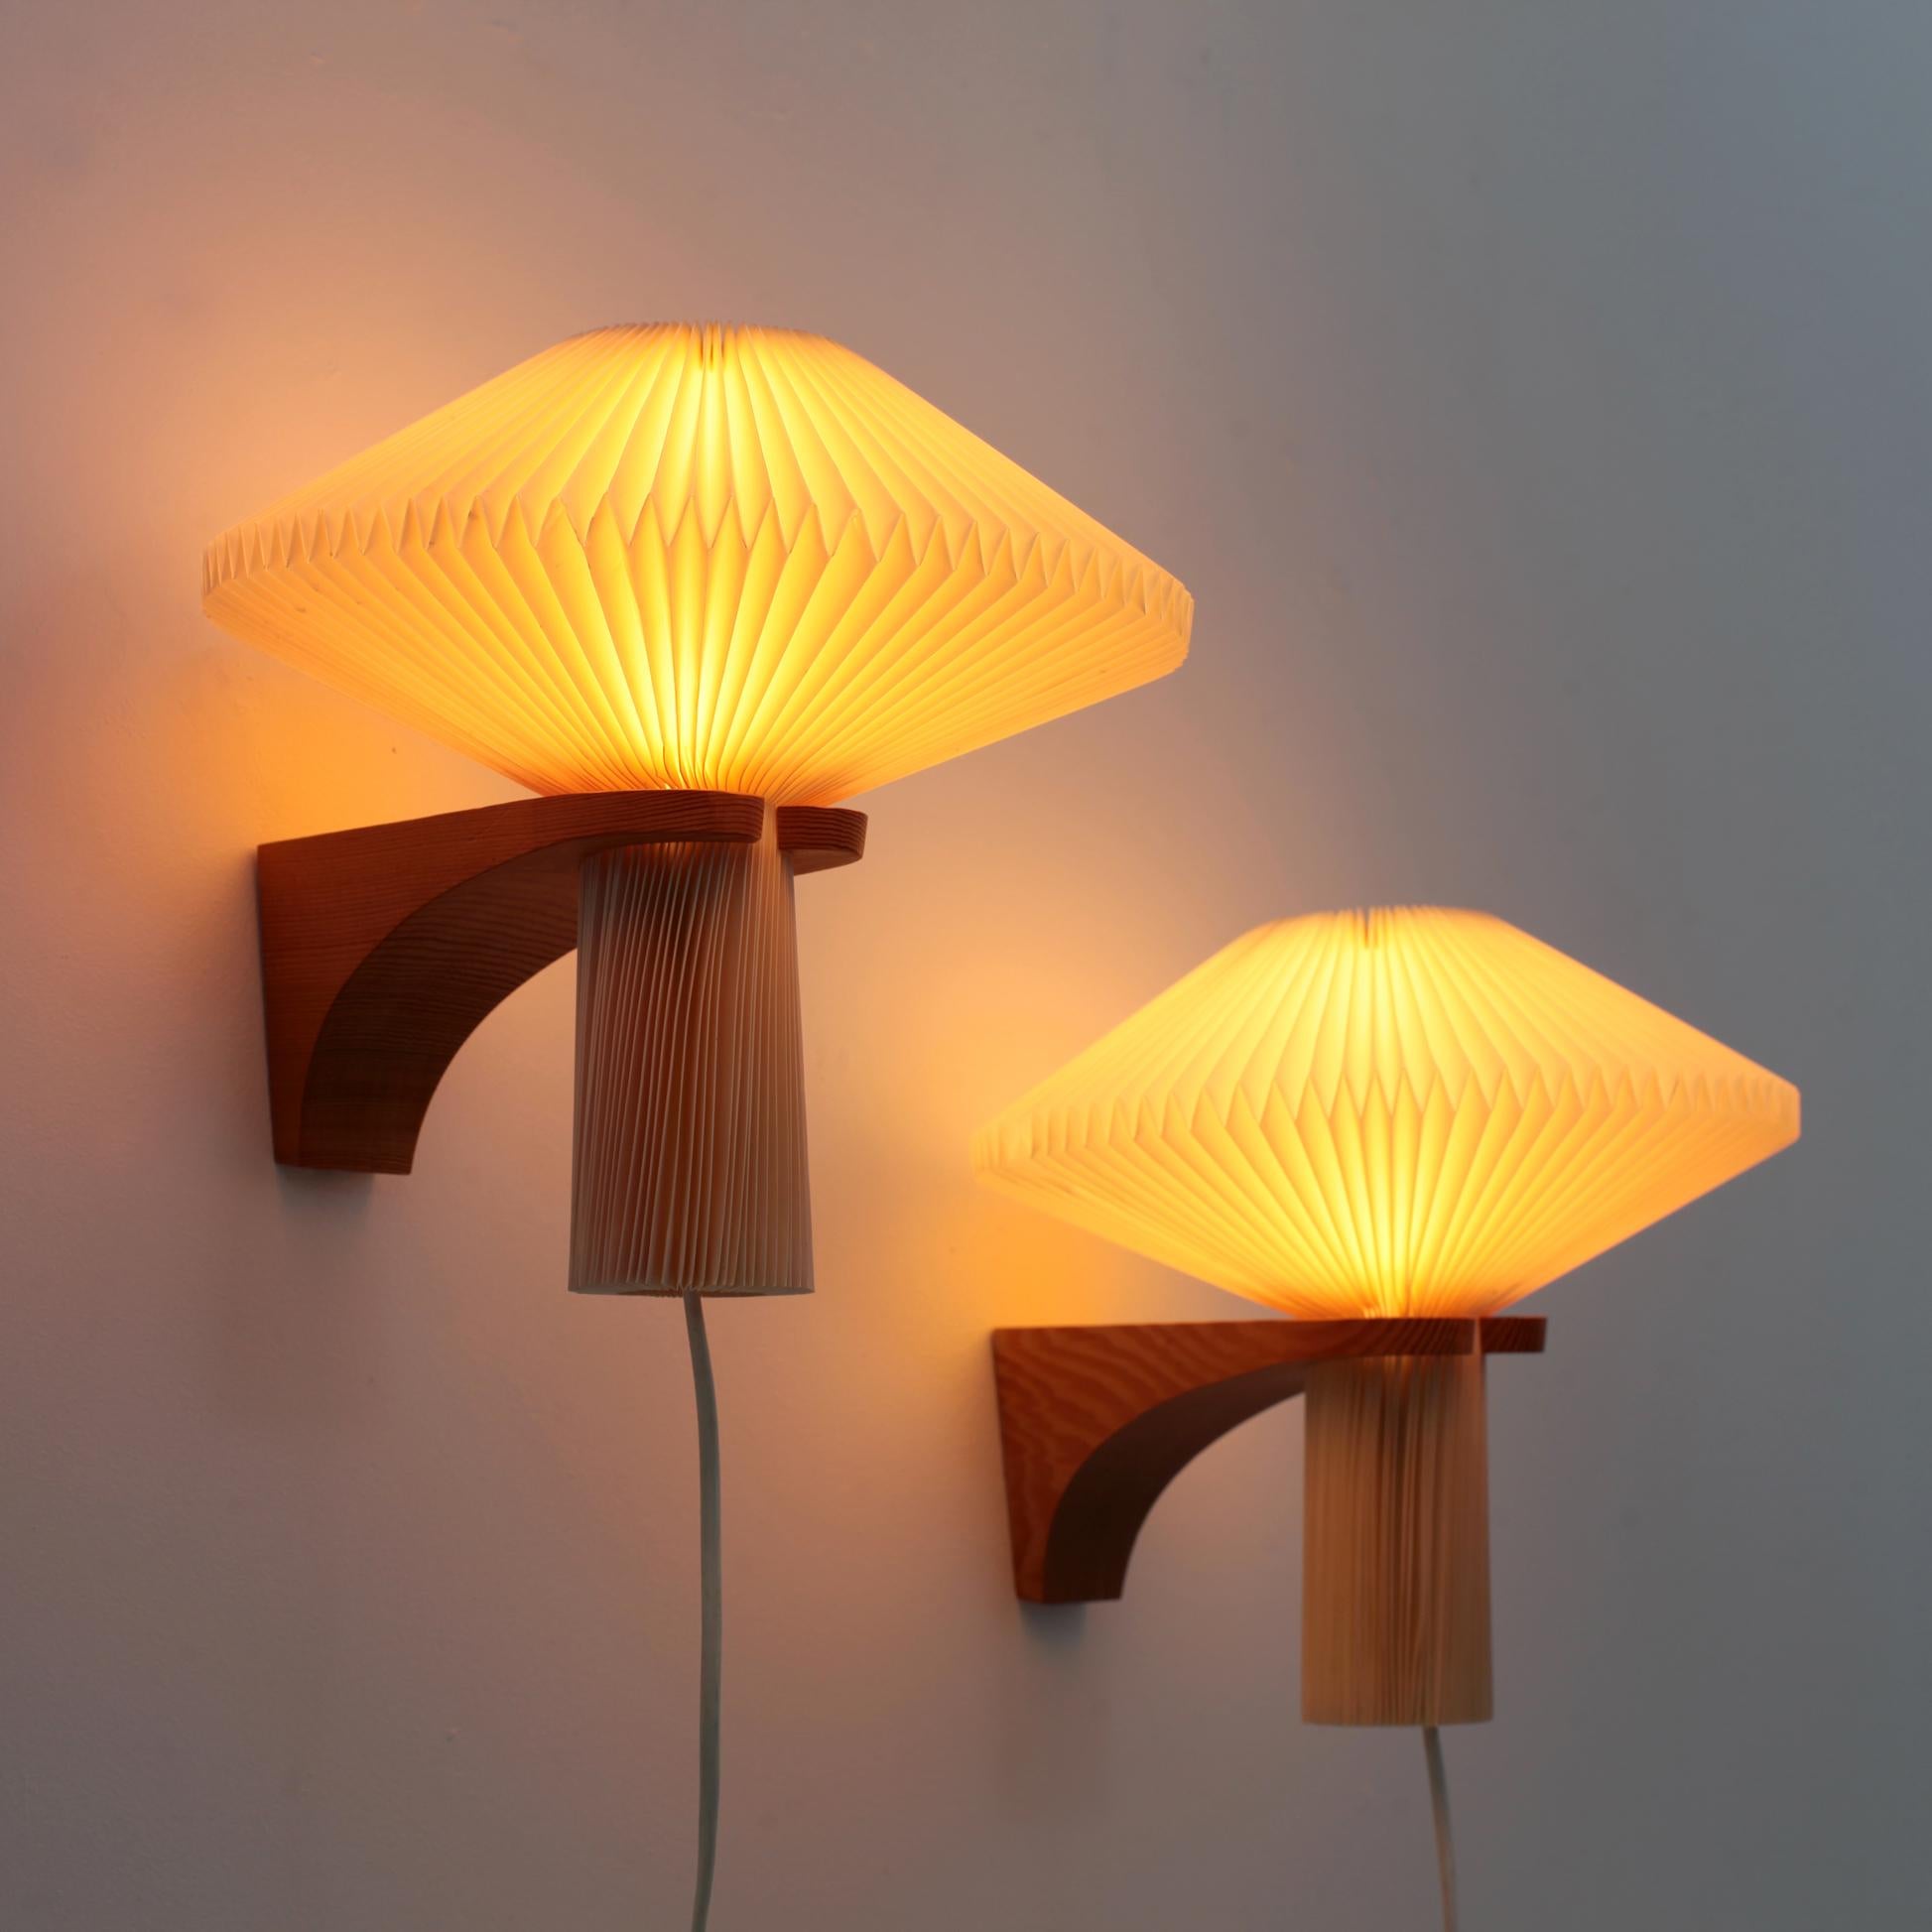 Rare pair of Le Klint wall lamps or sconces designed in 1957 by Danish designer Vilhelm Wohlert for Le Klint.
Model 204 or 